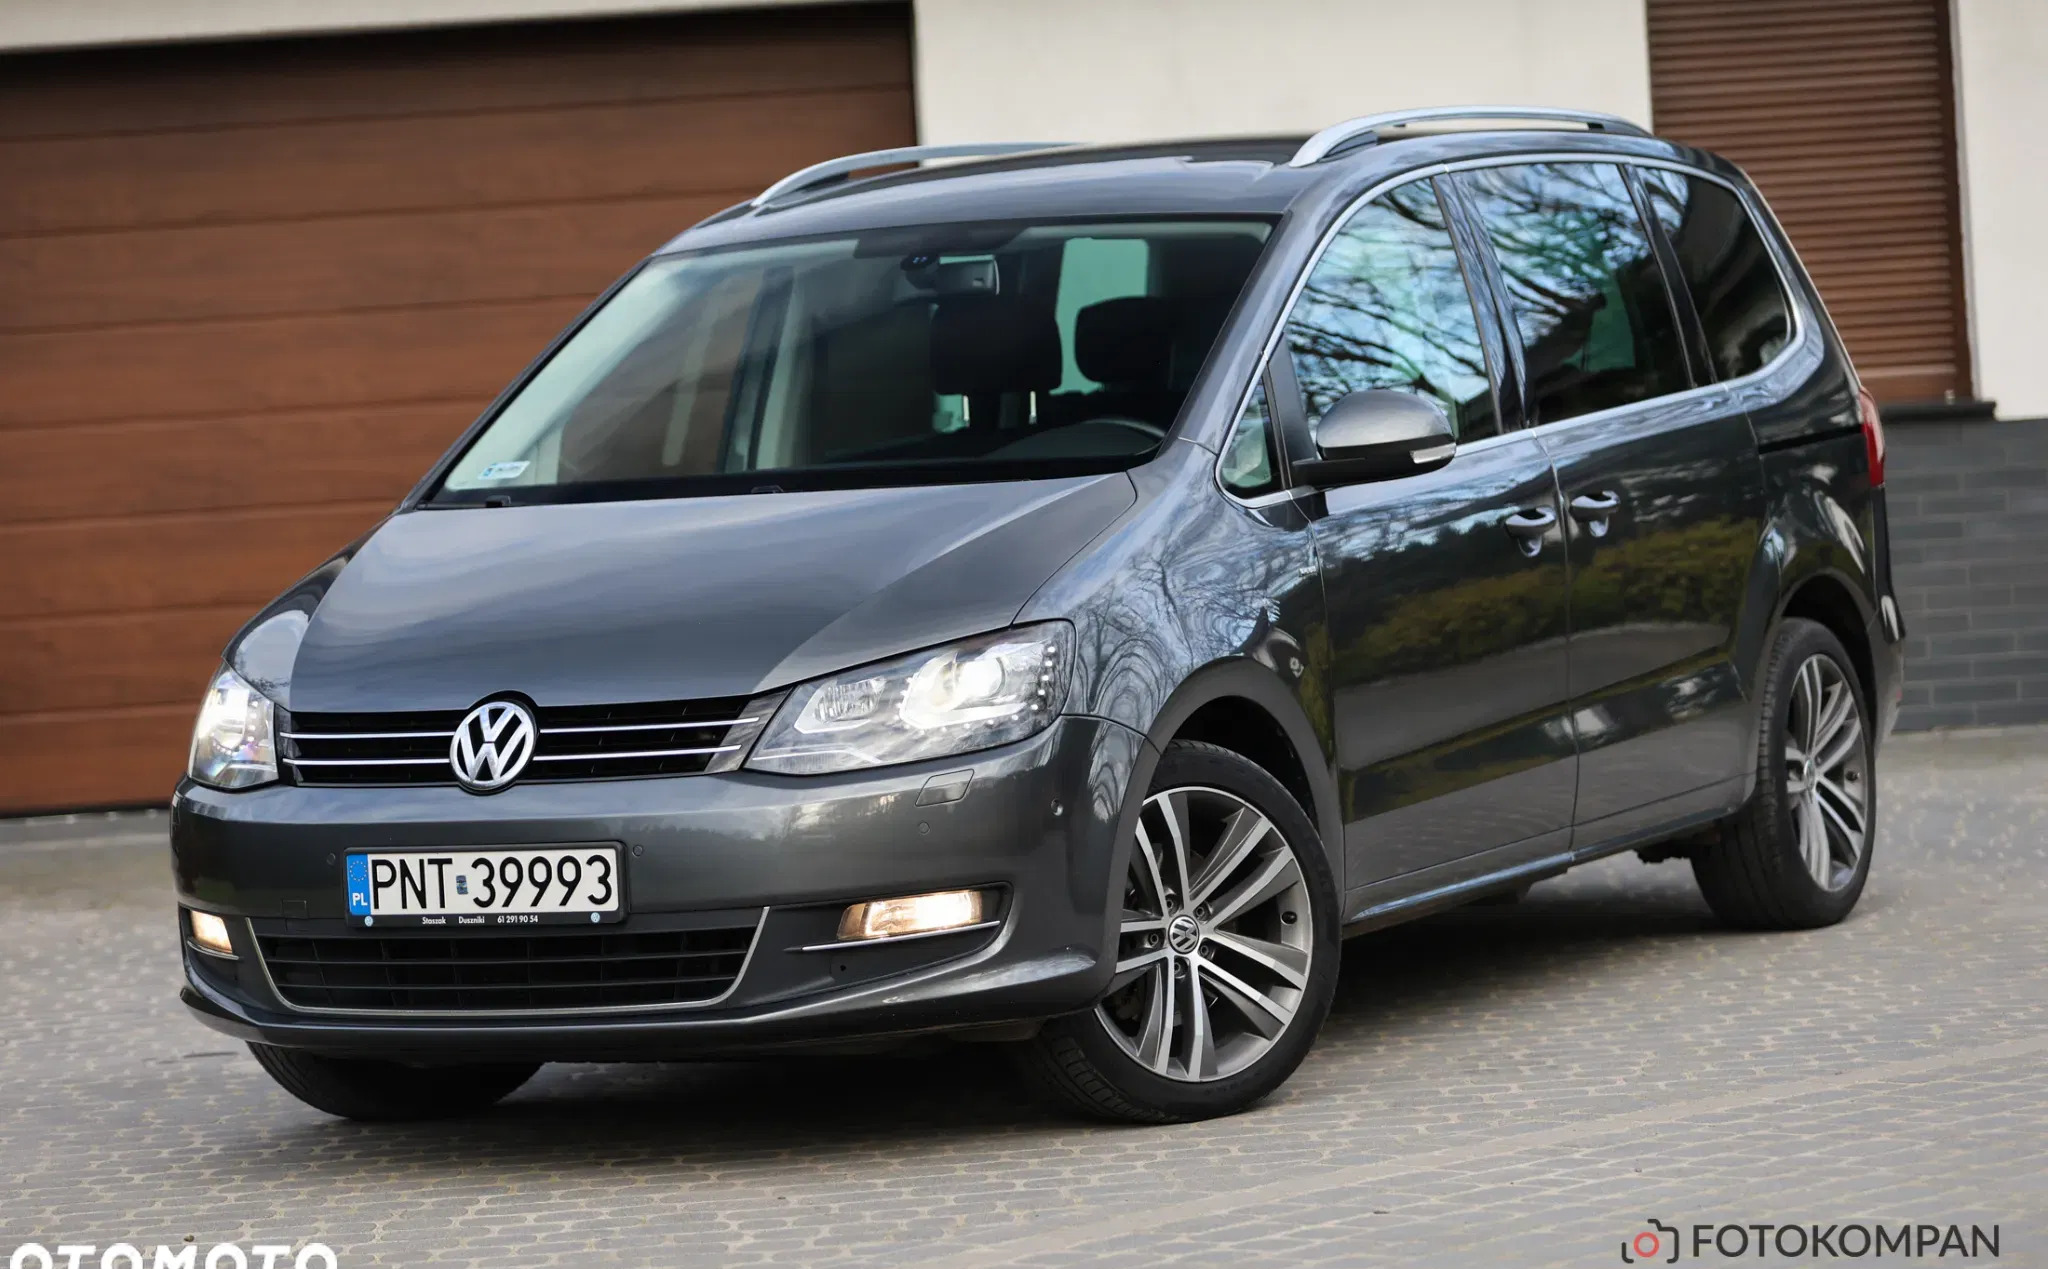 volkswagen sharan Volkswagen Sharan cena 57500 przebieg: 262418, rok produkcji 2014 z Jaworzno